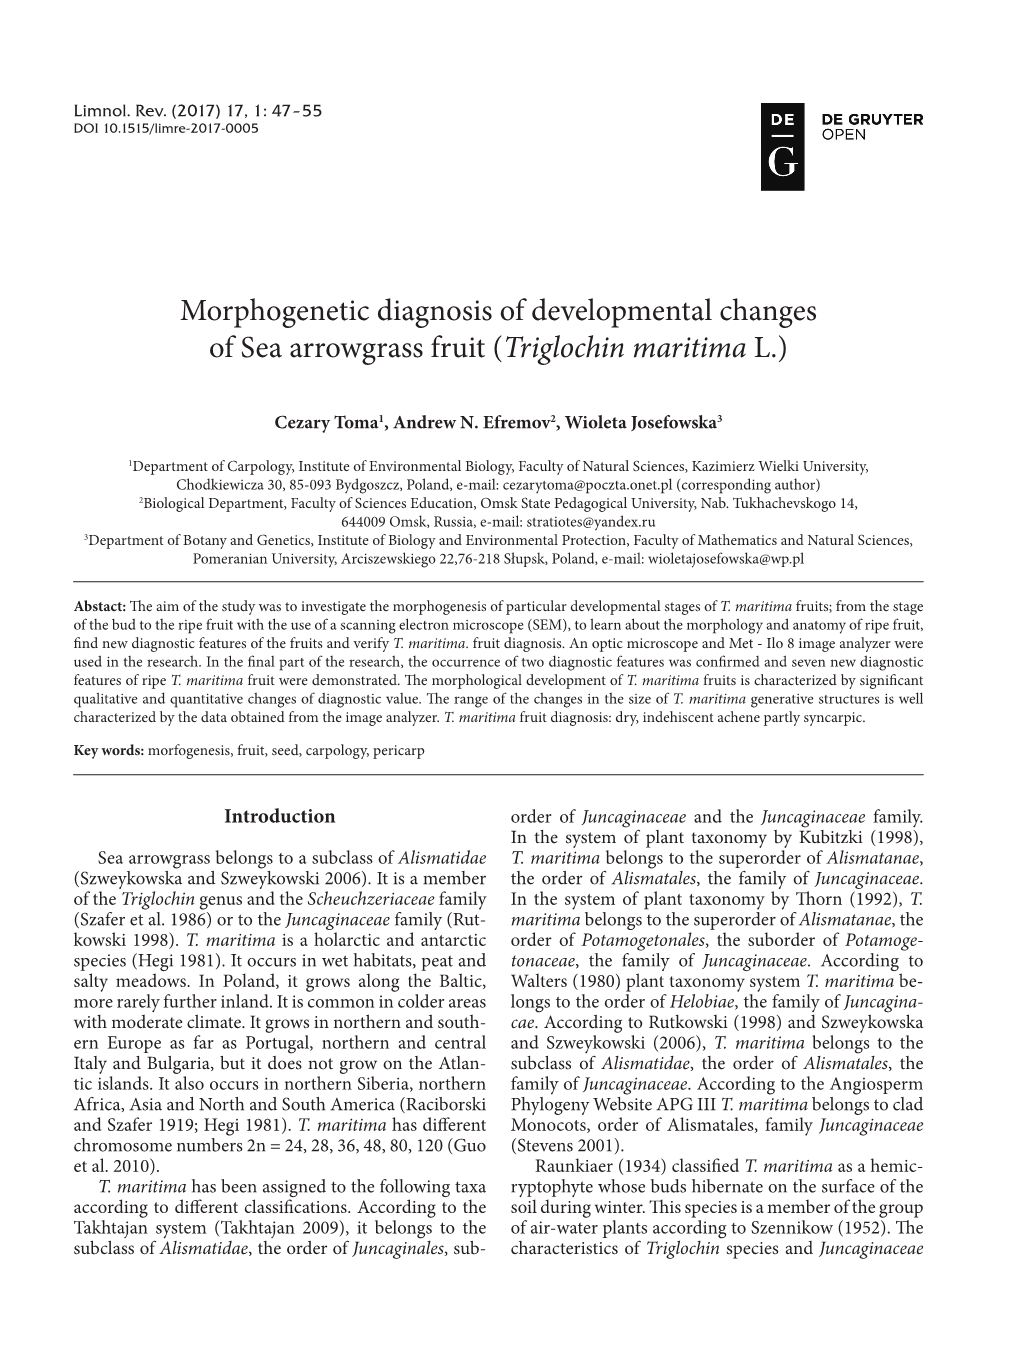 Morphogenetic Diagnosis of Developmental Changes of Sea Arrowgrass Fruit (Triglochin Maritima L.)